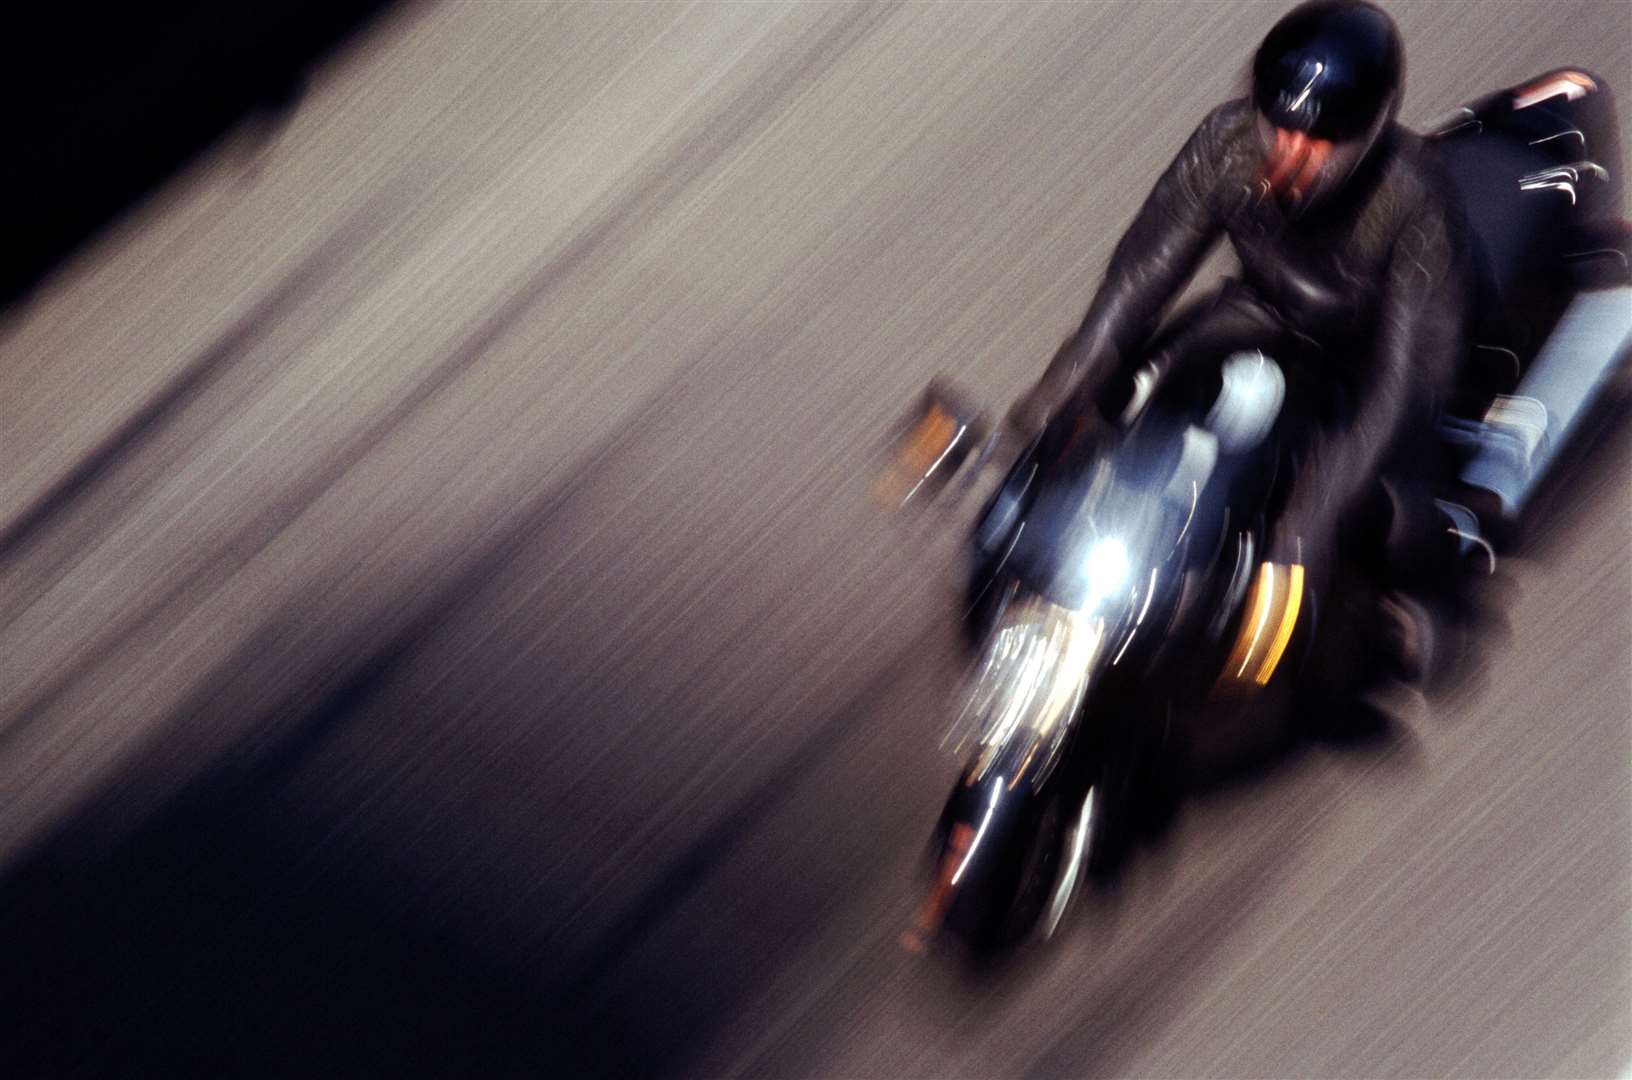 Stock pic: Man riding a motorbike